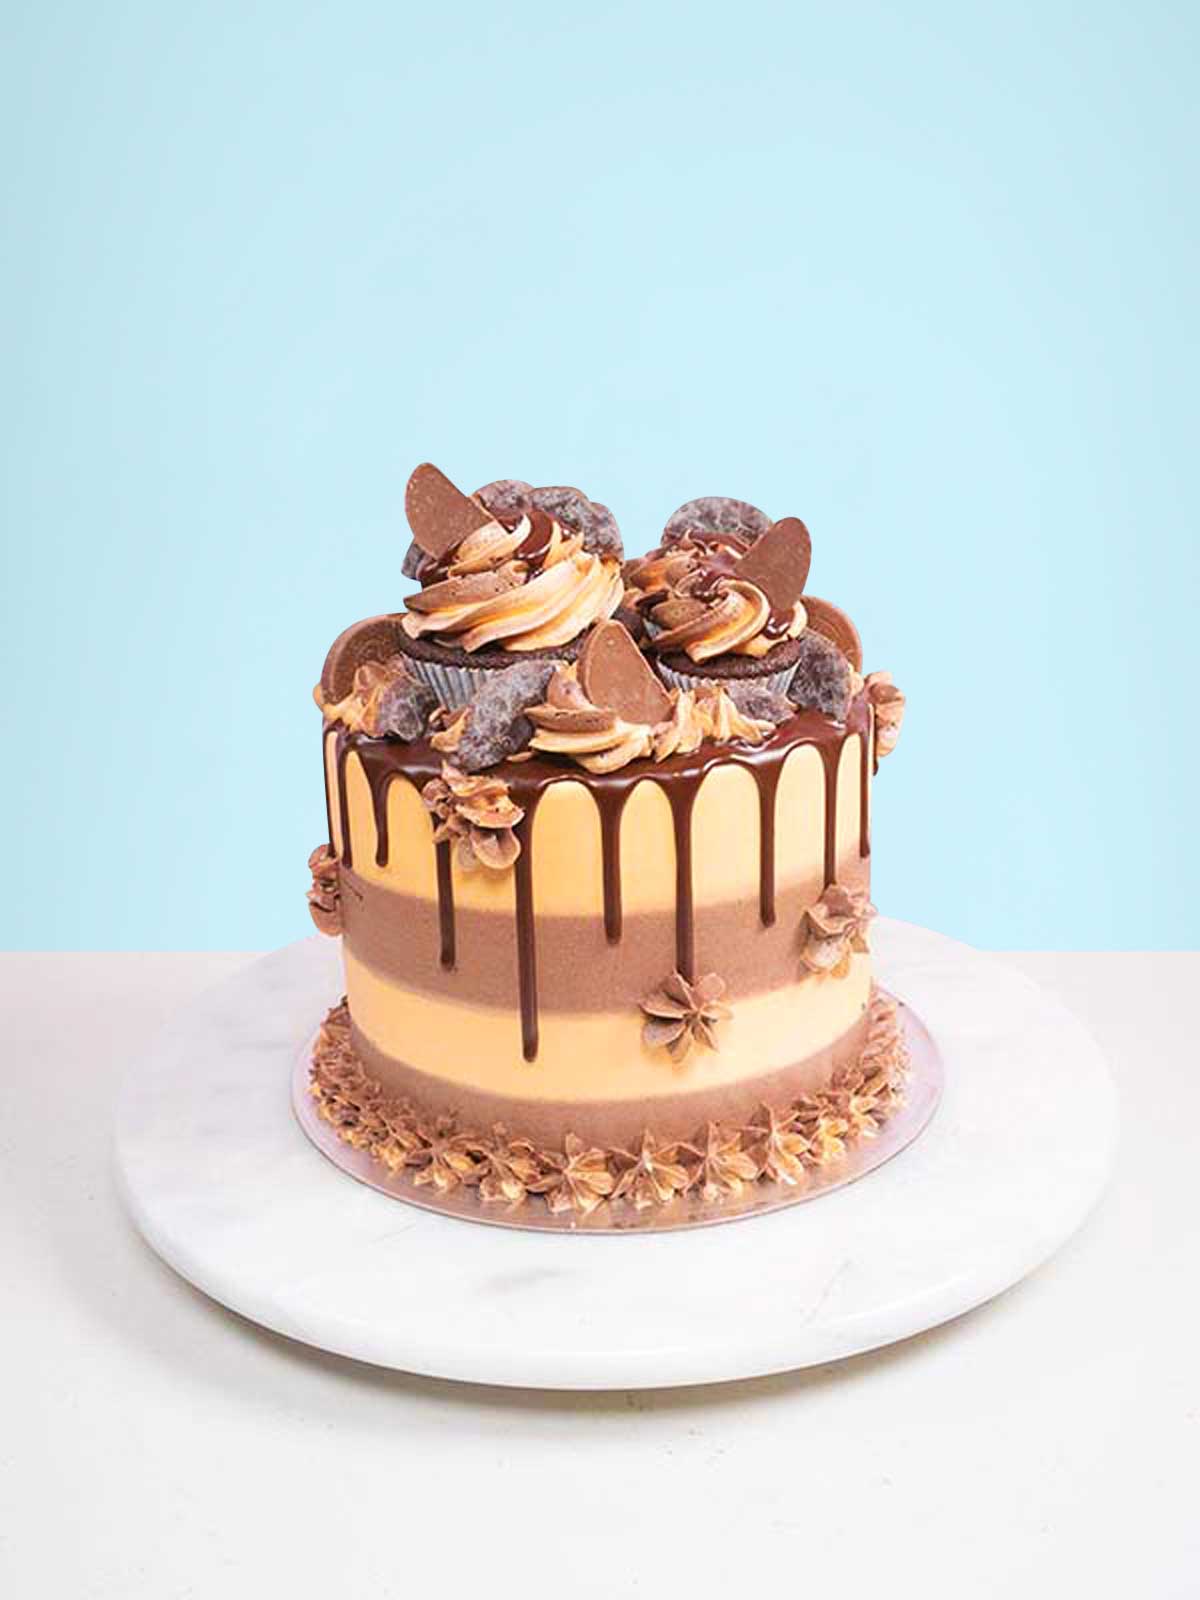 Birthday Cakes for Men - Hands On Design Cakes